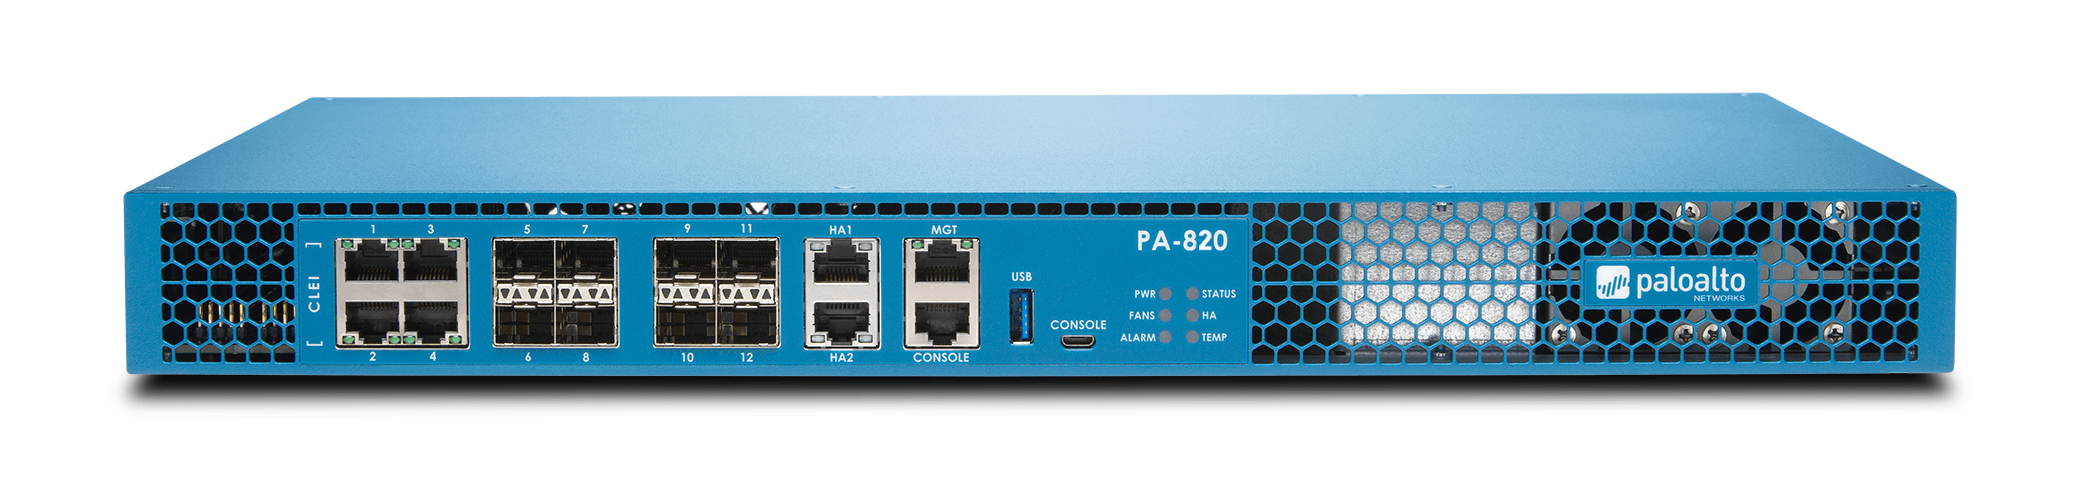 (NEW VENDOR) PALO ALTO PAN-PA-820 Palo Alto Networks PA-820, Firewall Throughput: 1.6 Gbps; Threat Prevention Throughput: 800 Mbps - C2 Computer